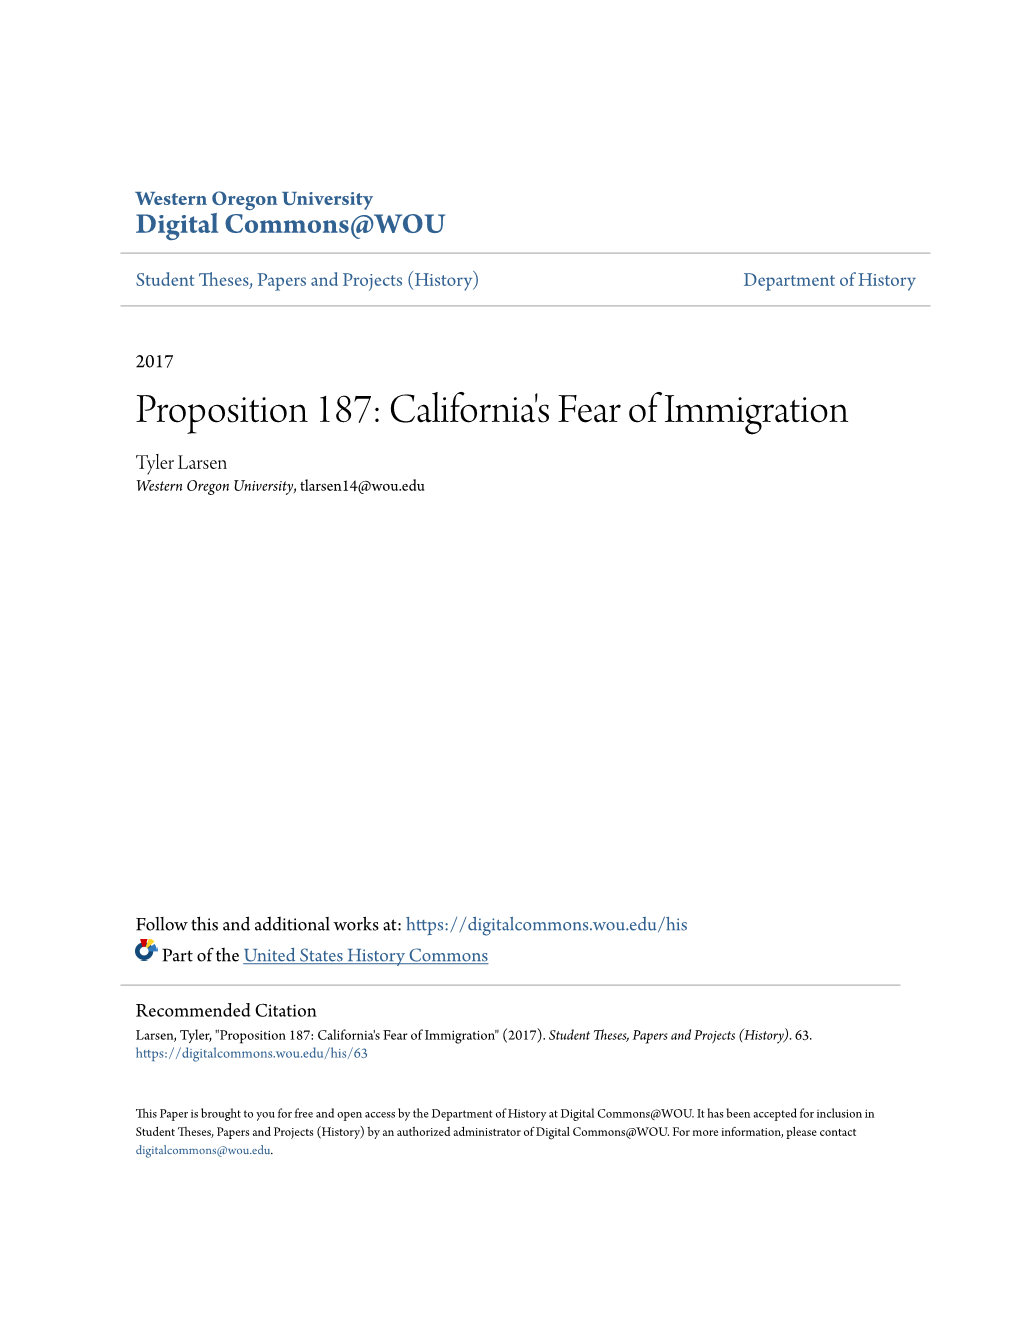 Proposition 187: California's Fear of Immigration Tyler Larsen Western Oregon University, Tlarsen14@Wou.Edu